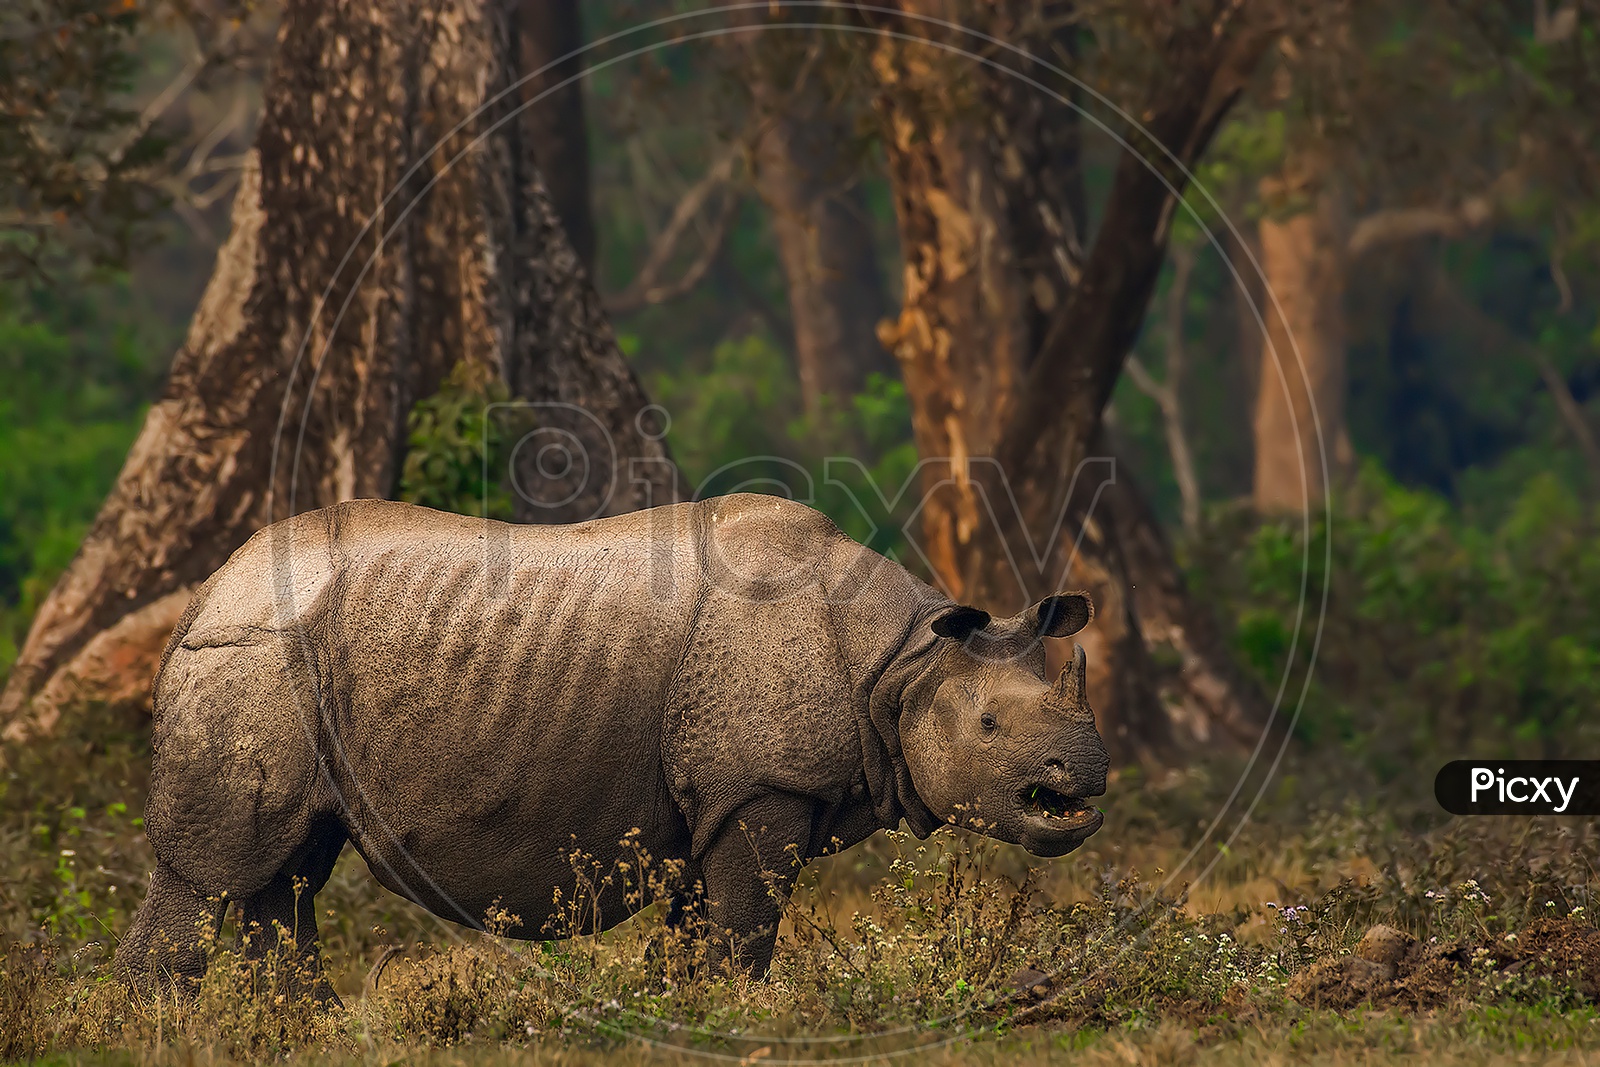 The greater one horned rhinoceros